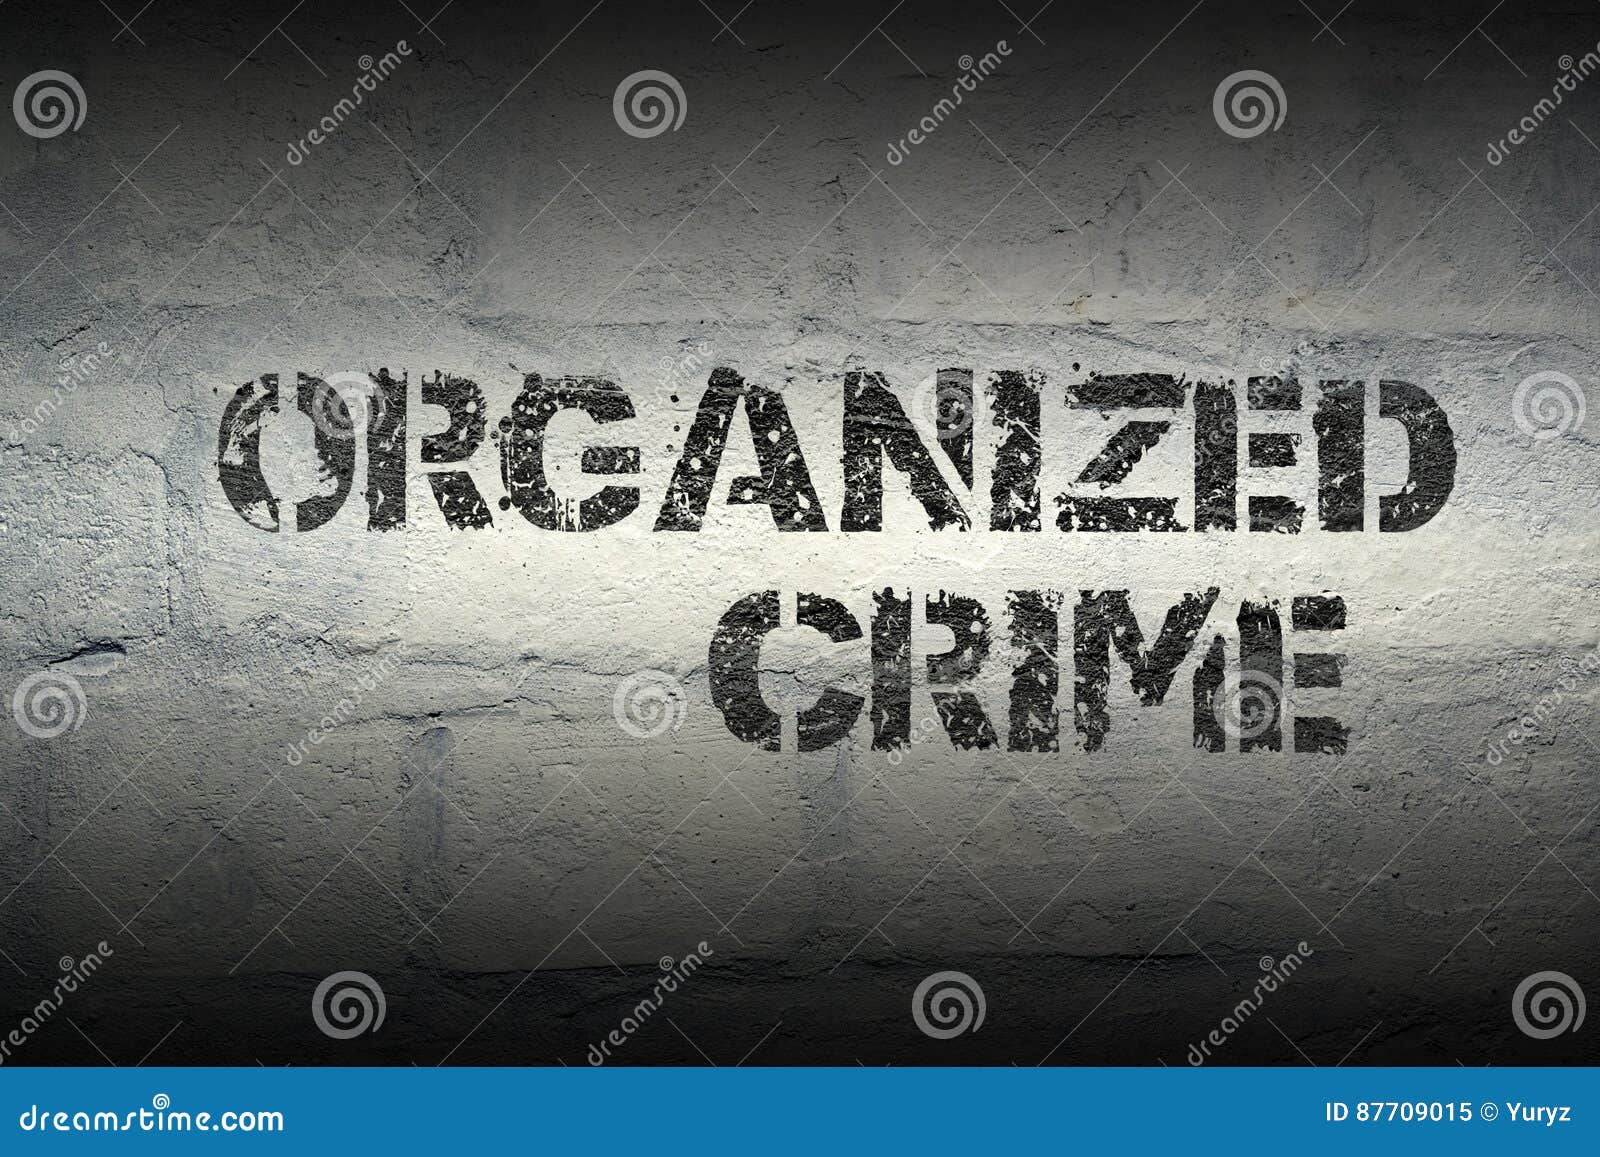 organized crime gr